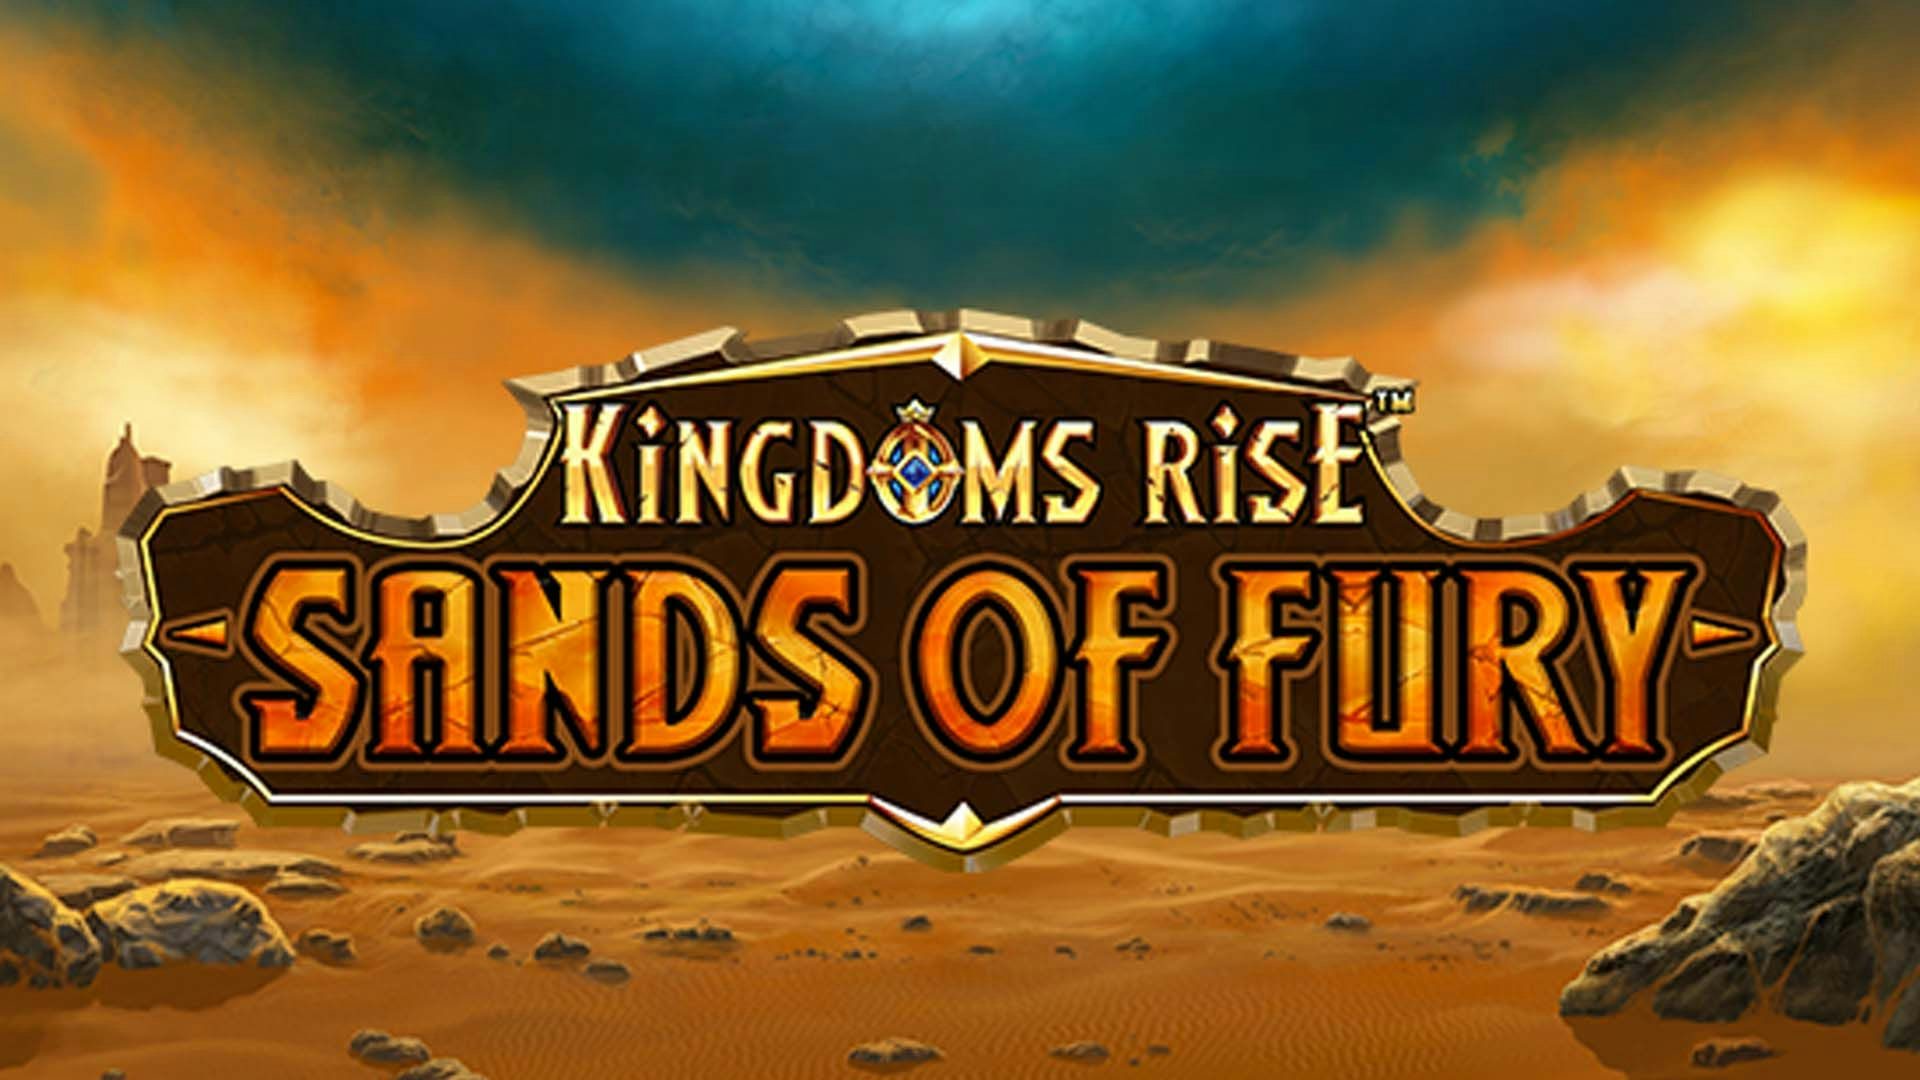 Kingdoms Rise: Sands of Fury